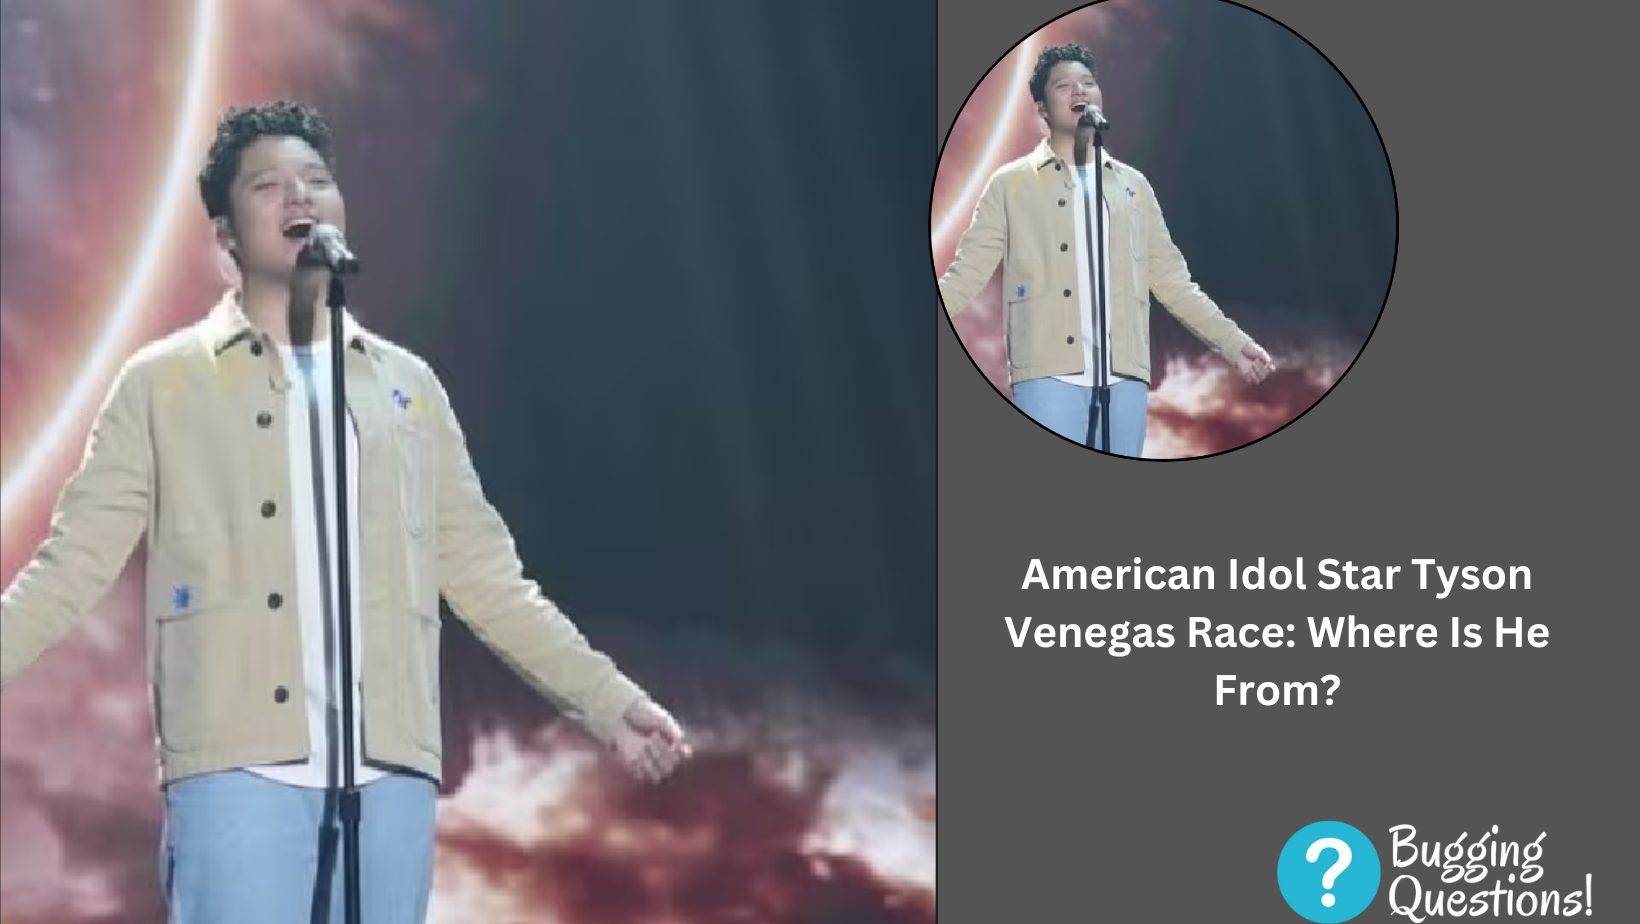 American Idol Star Tyson Venegas Race